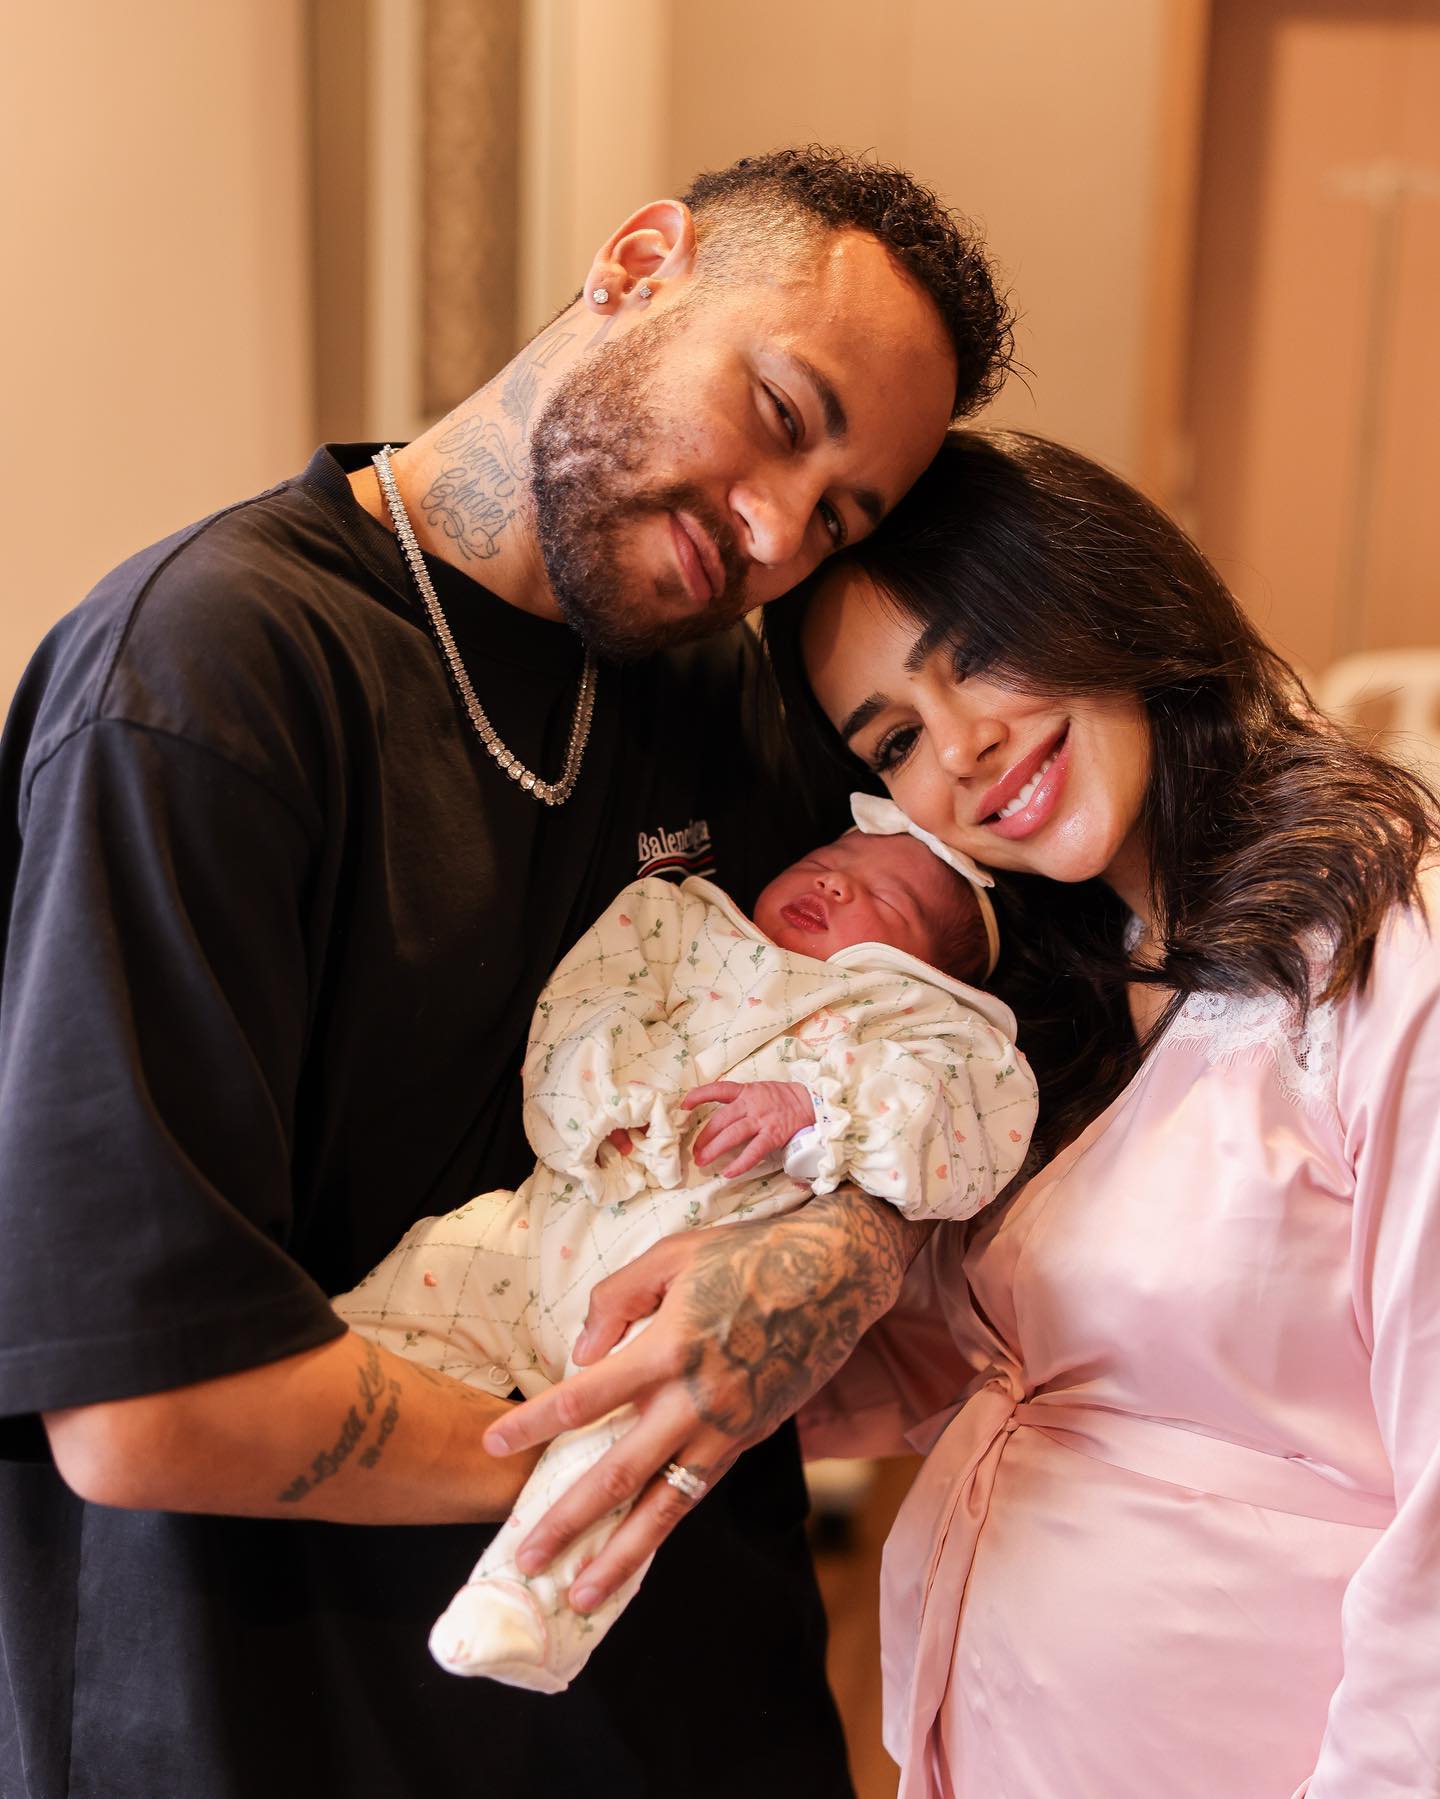 Neymar announces birth of daughter Mavie with stunning model girlfriend  Bruna Biancardi in emotional Instagram post | The US Sun